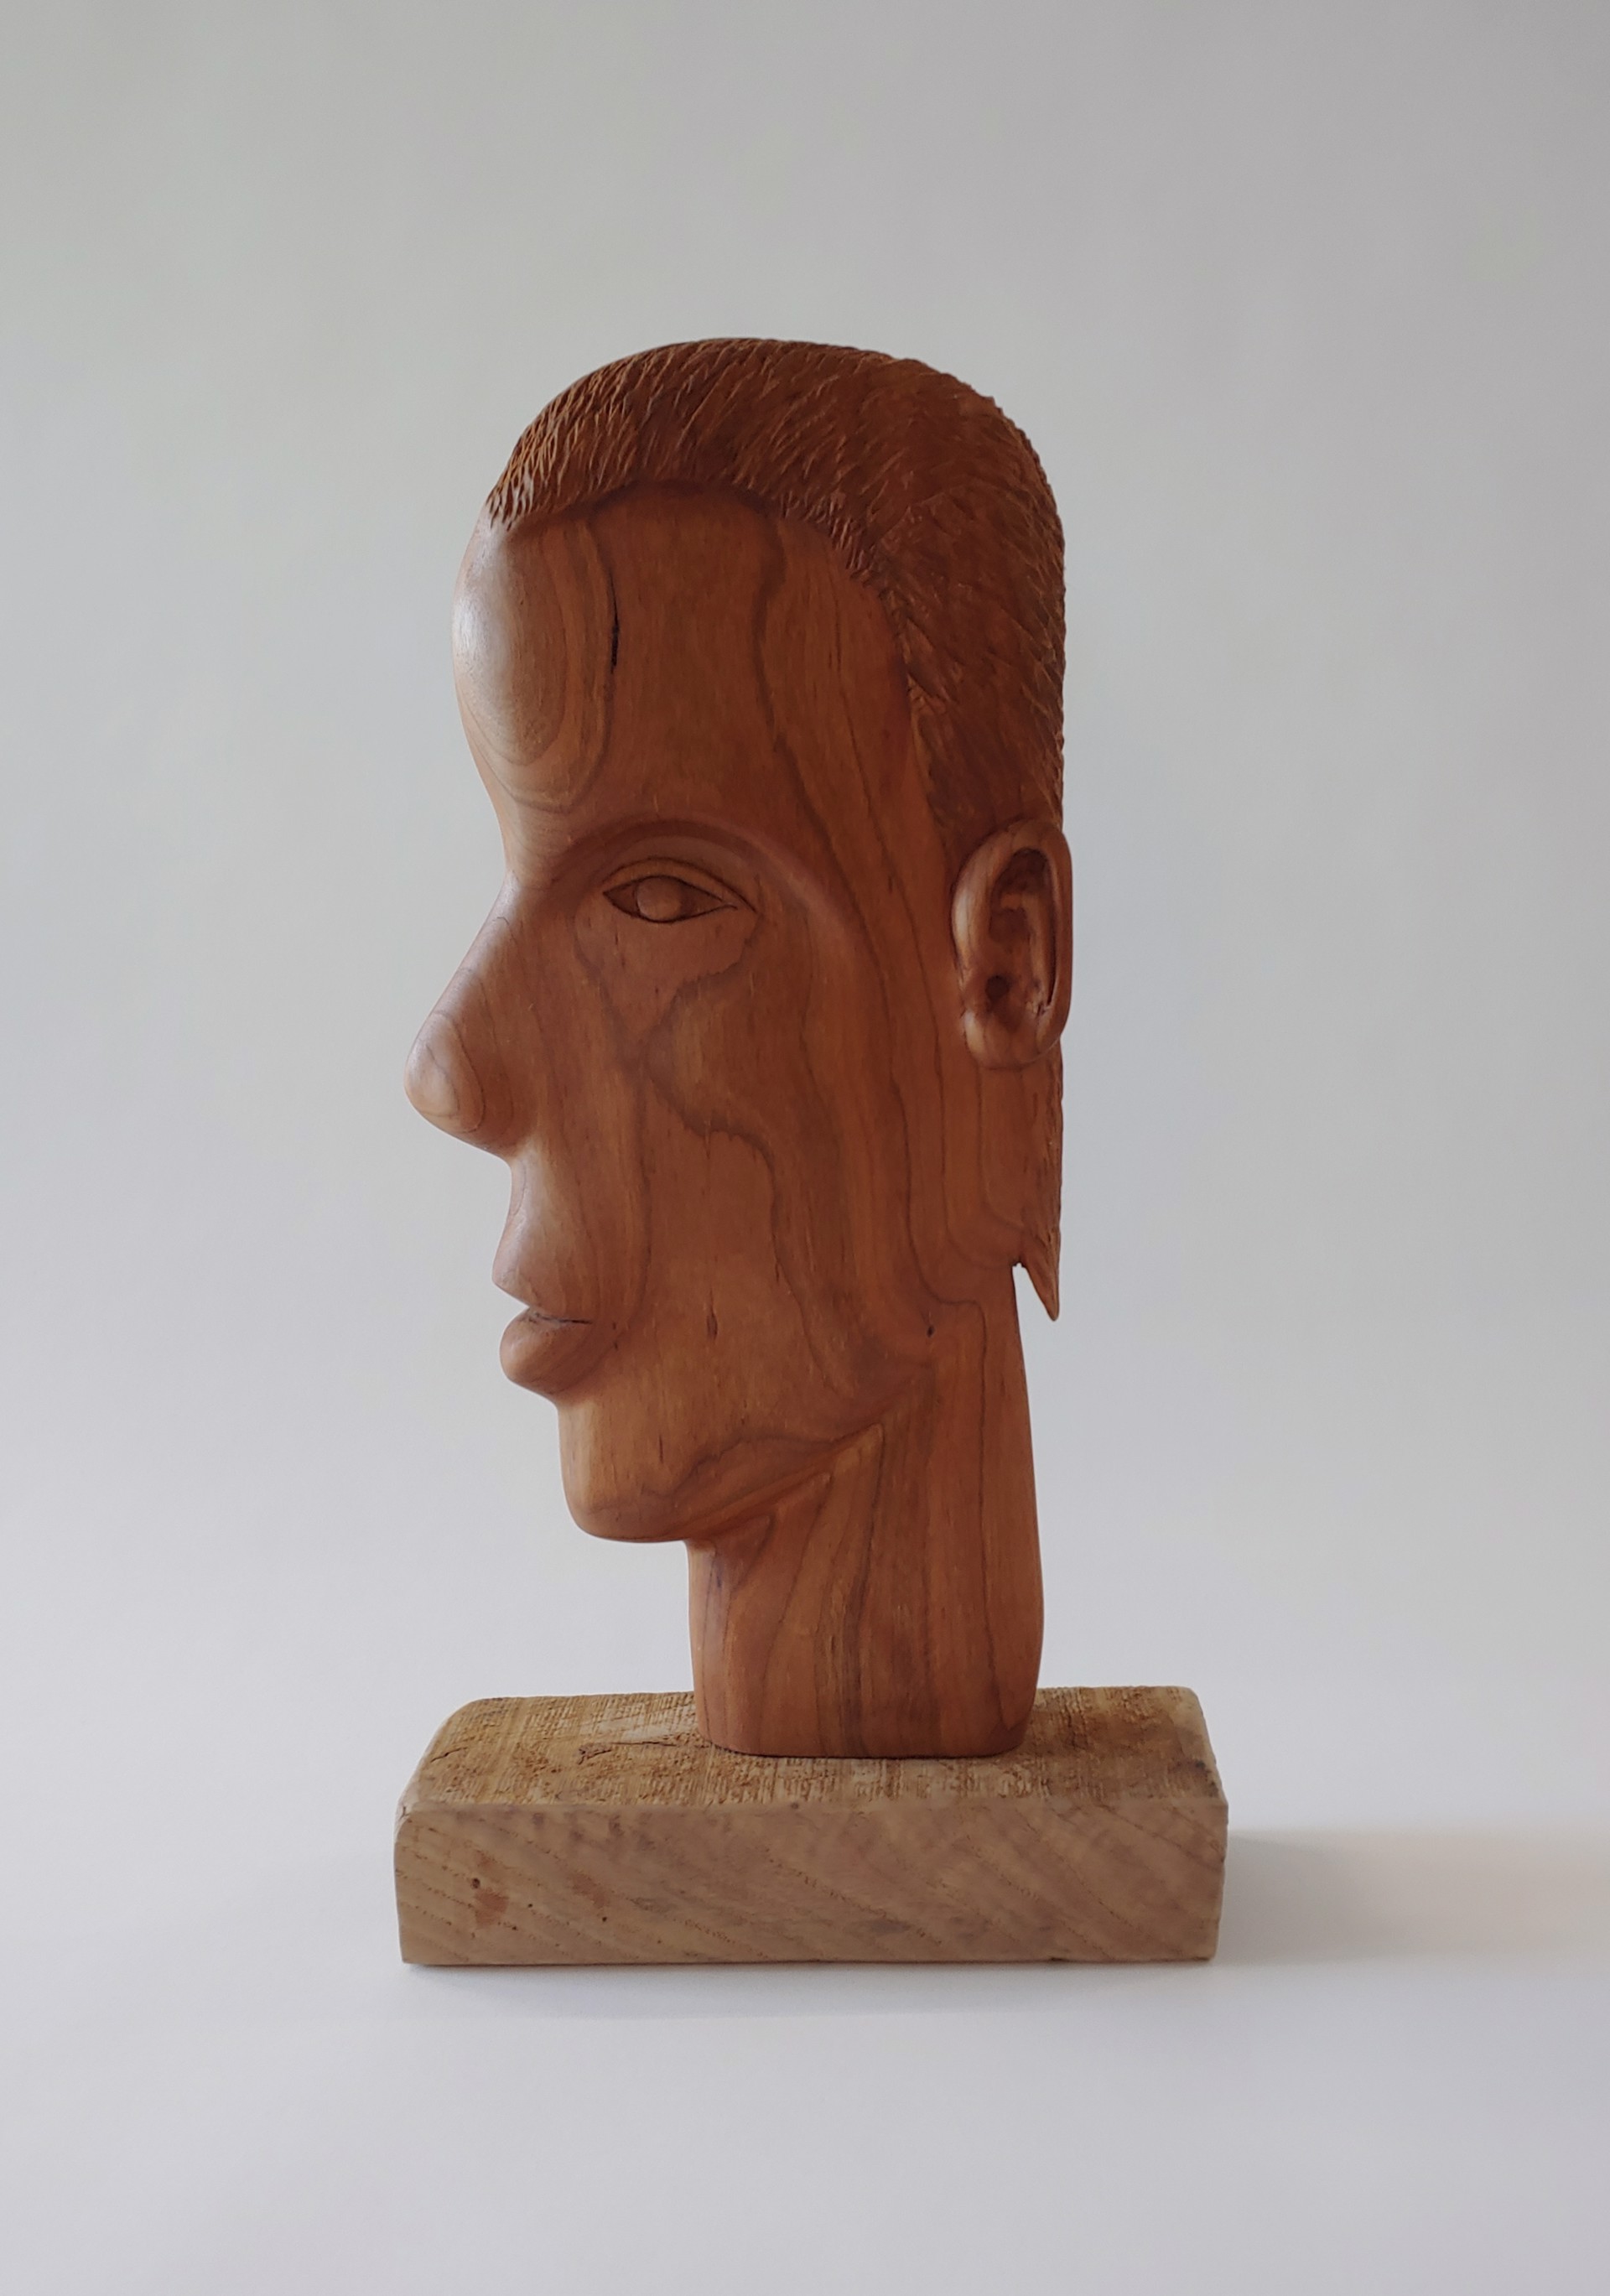 Man's Profile - Wood Sculpture by David Amdur